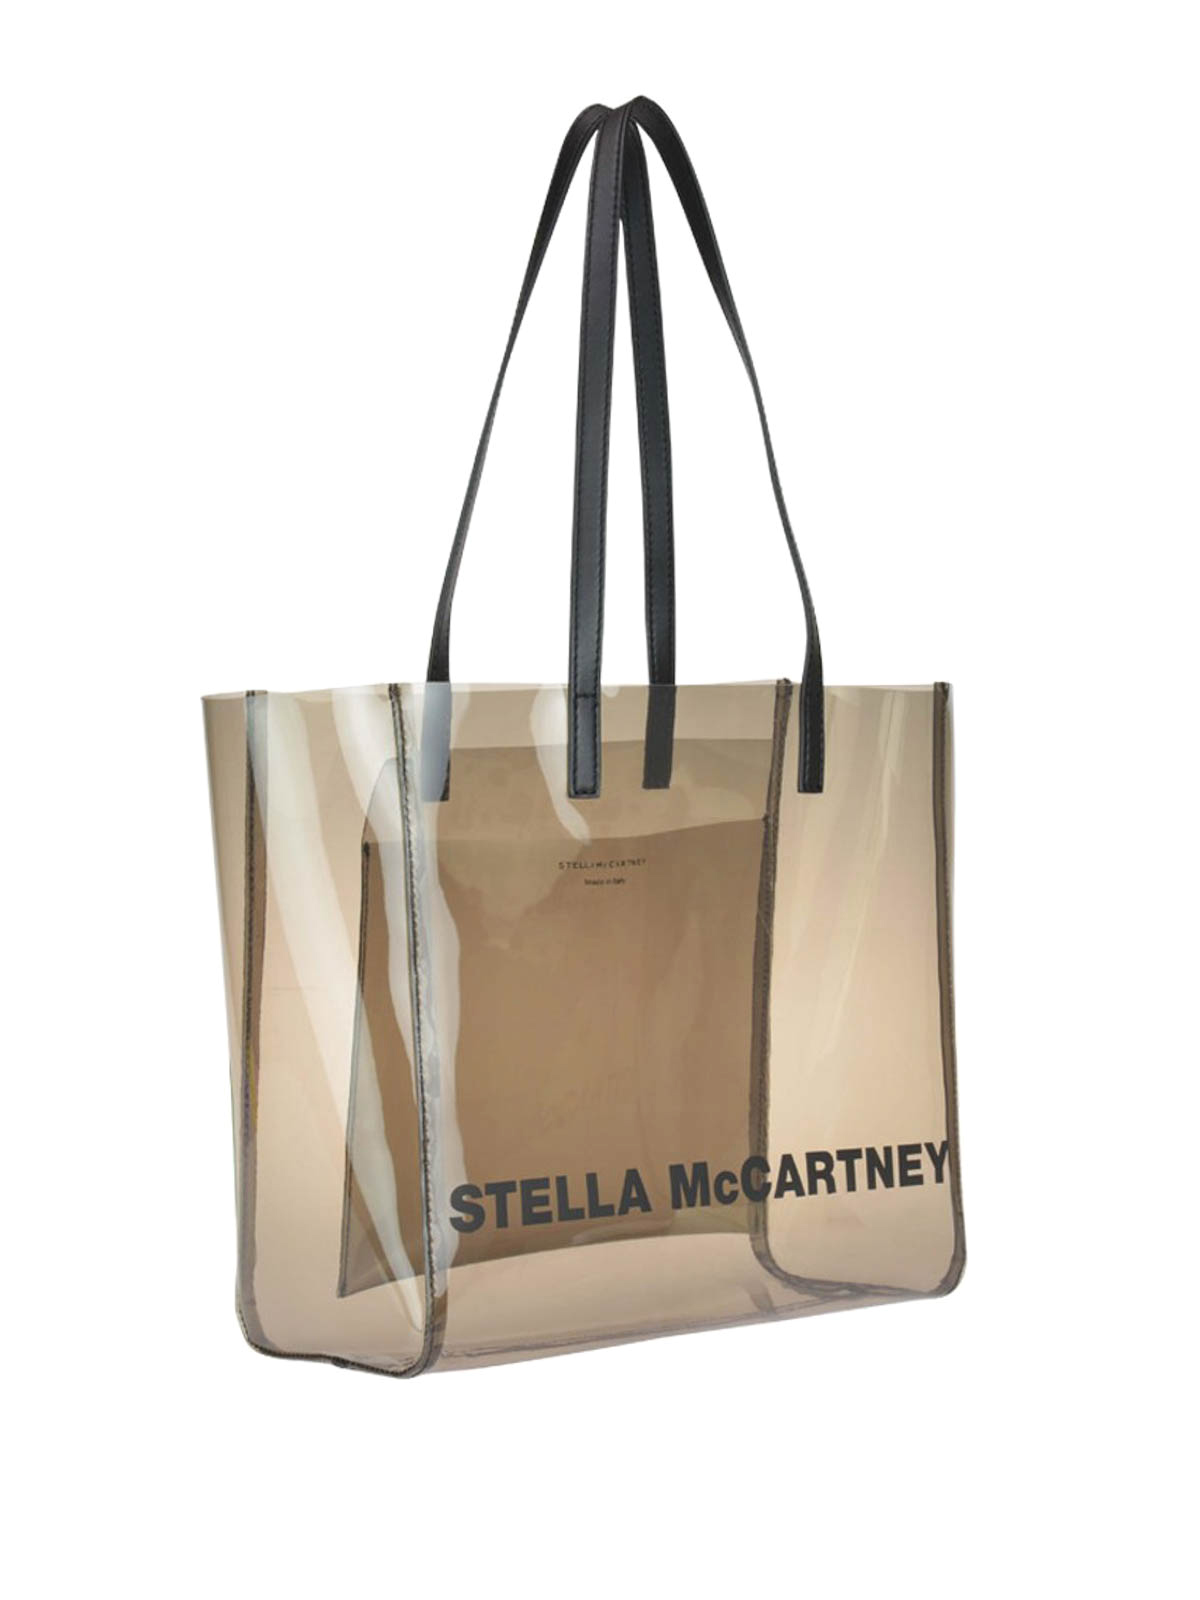 stella mccartney tote bag